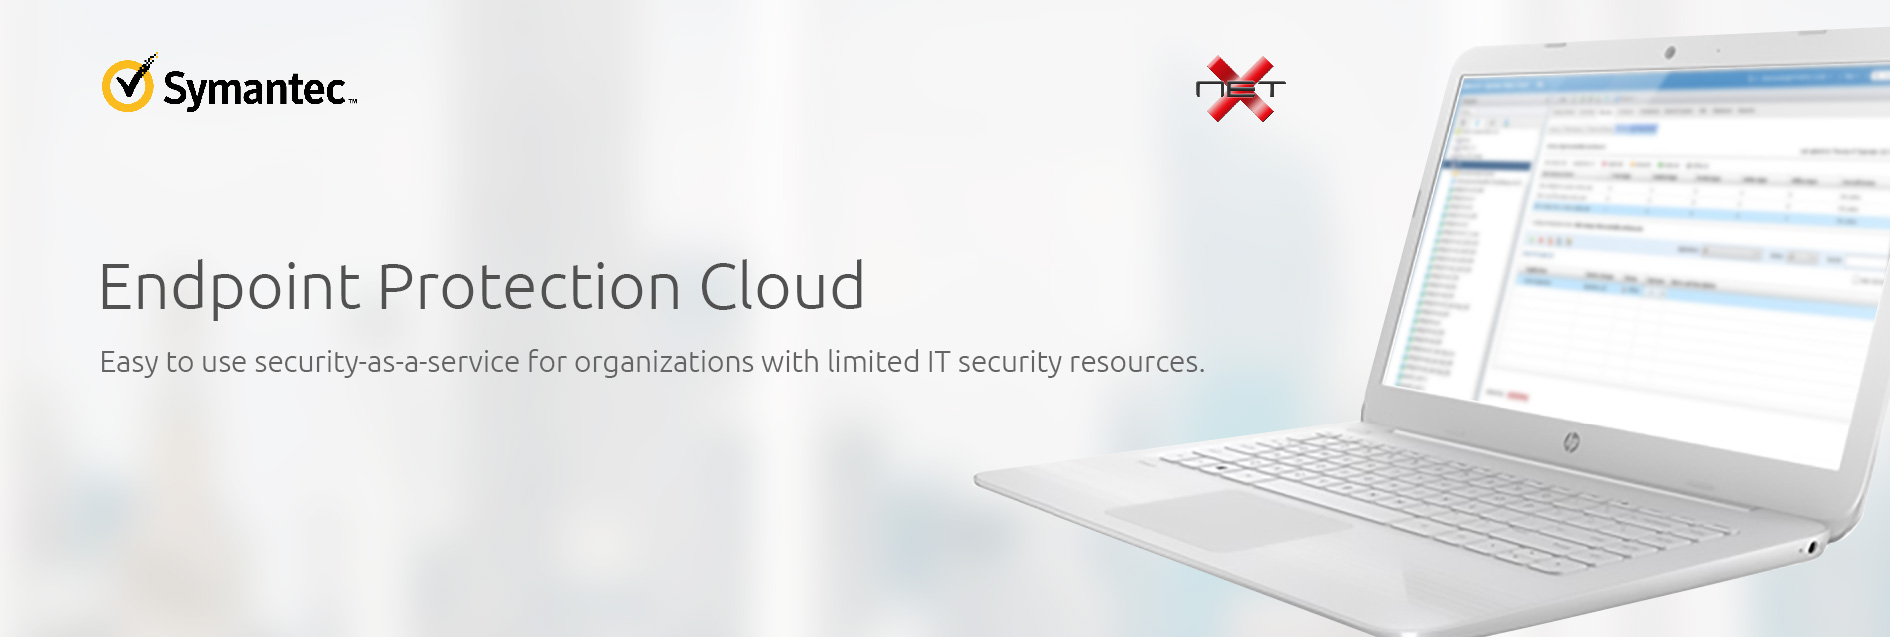 symantec endpoint protection cloud remote wipe